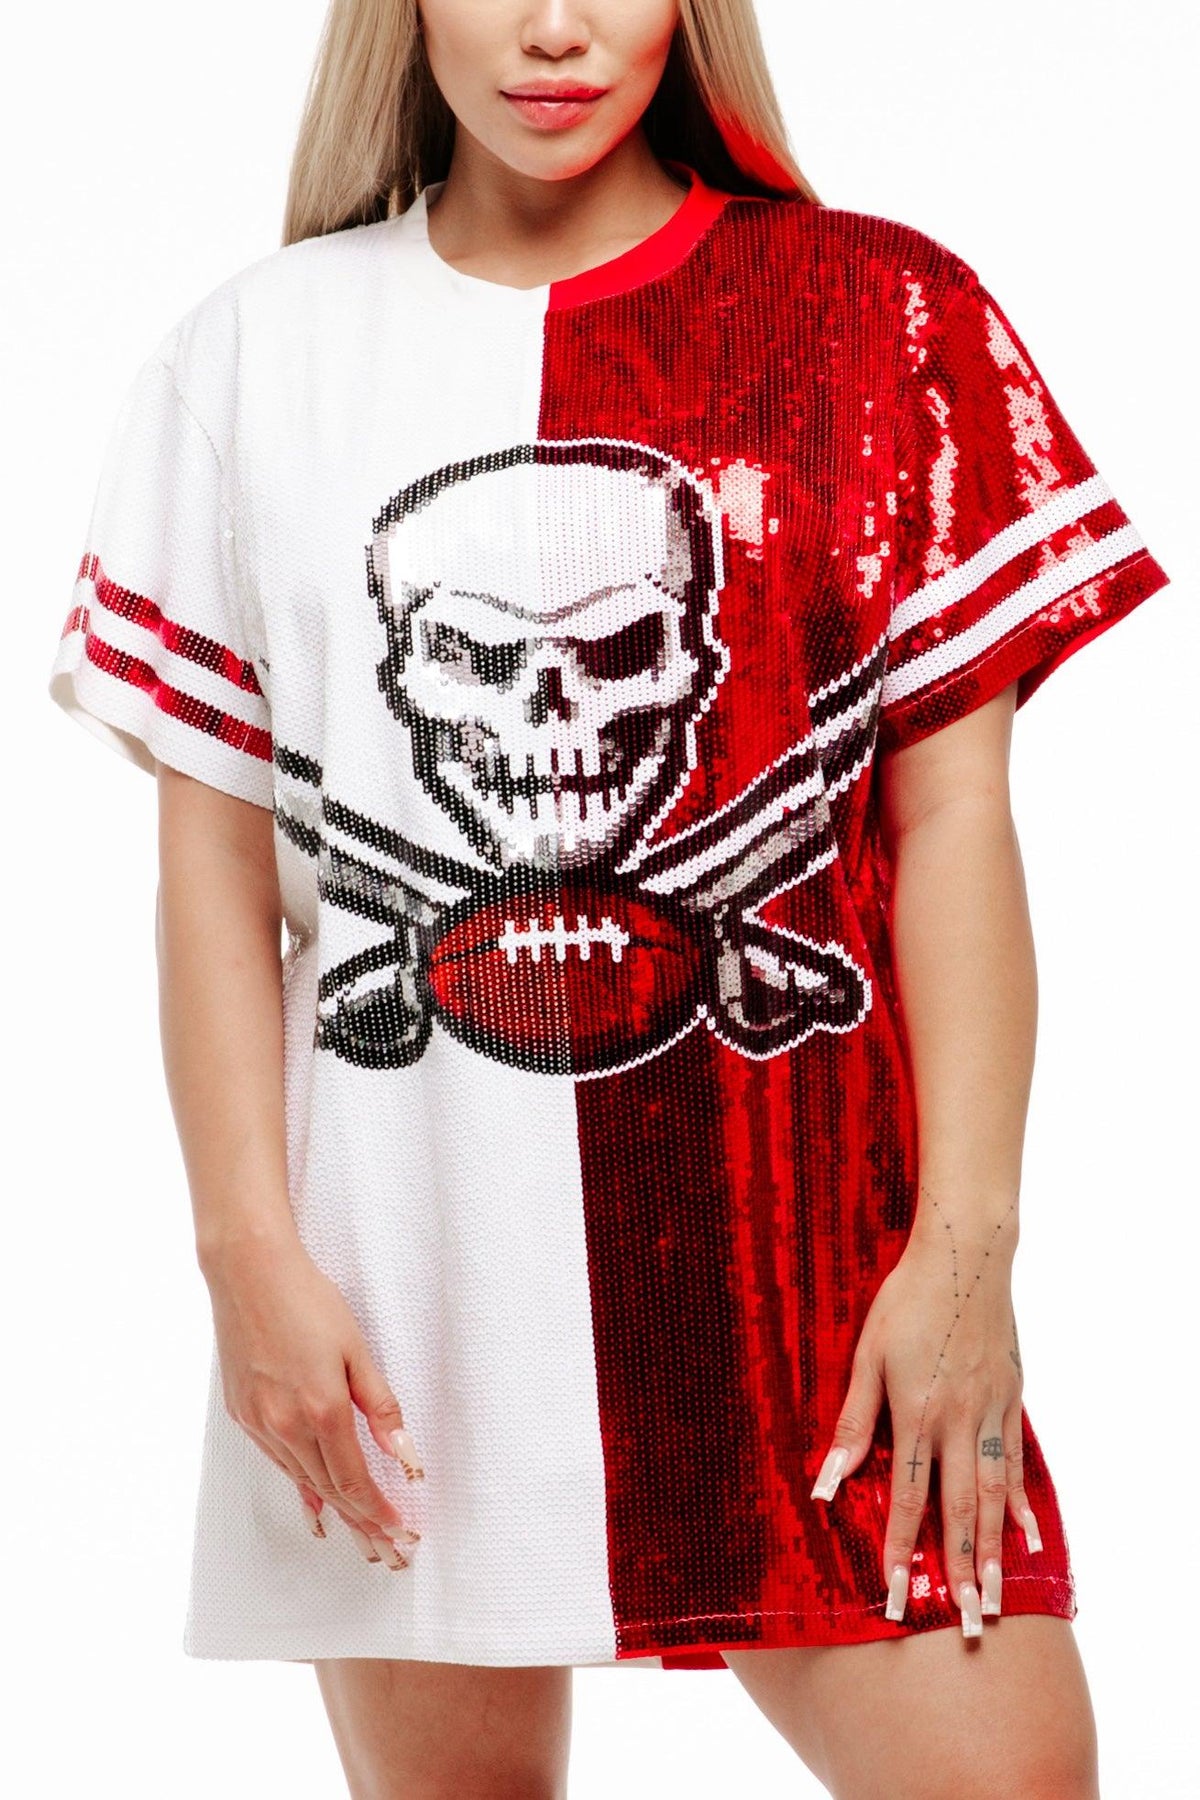 Tampa Bay Football Sequin Dress - SEQUIN FANS